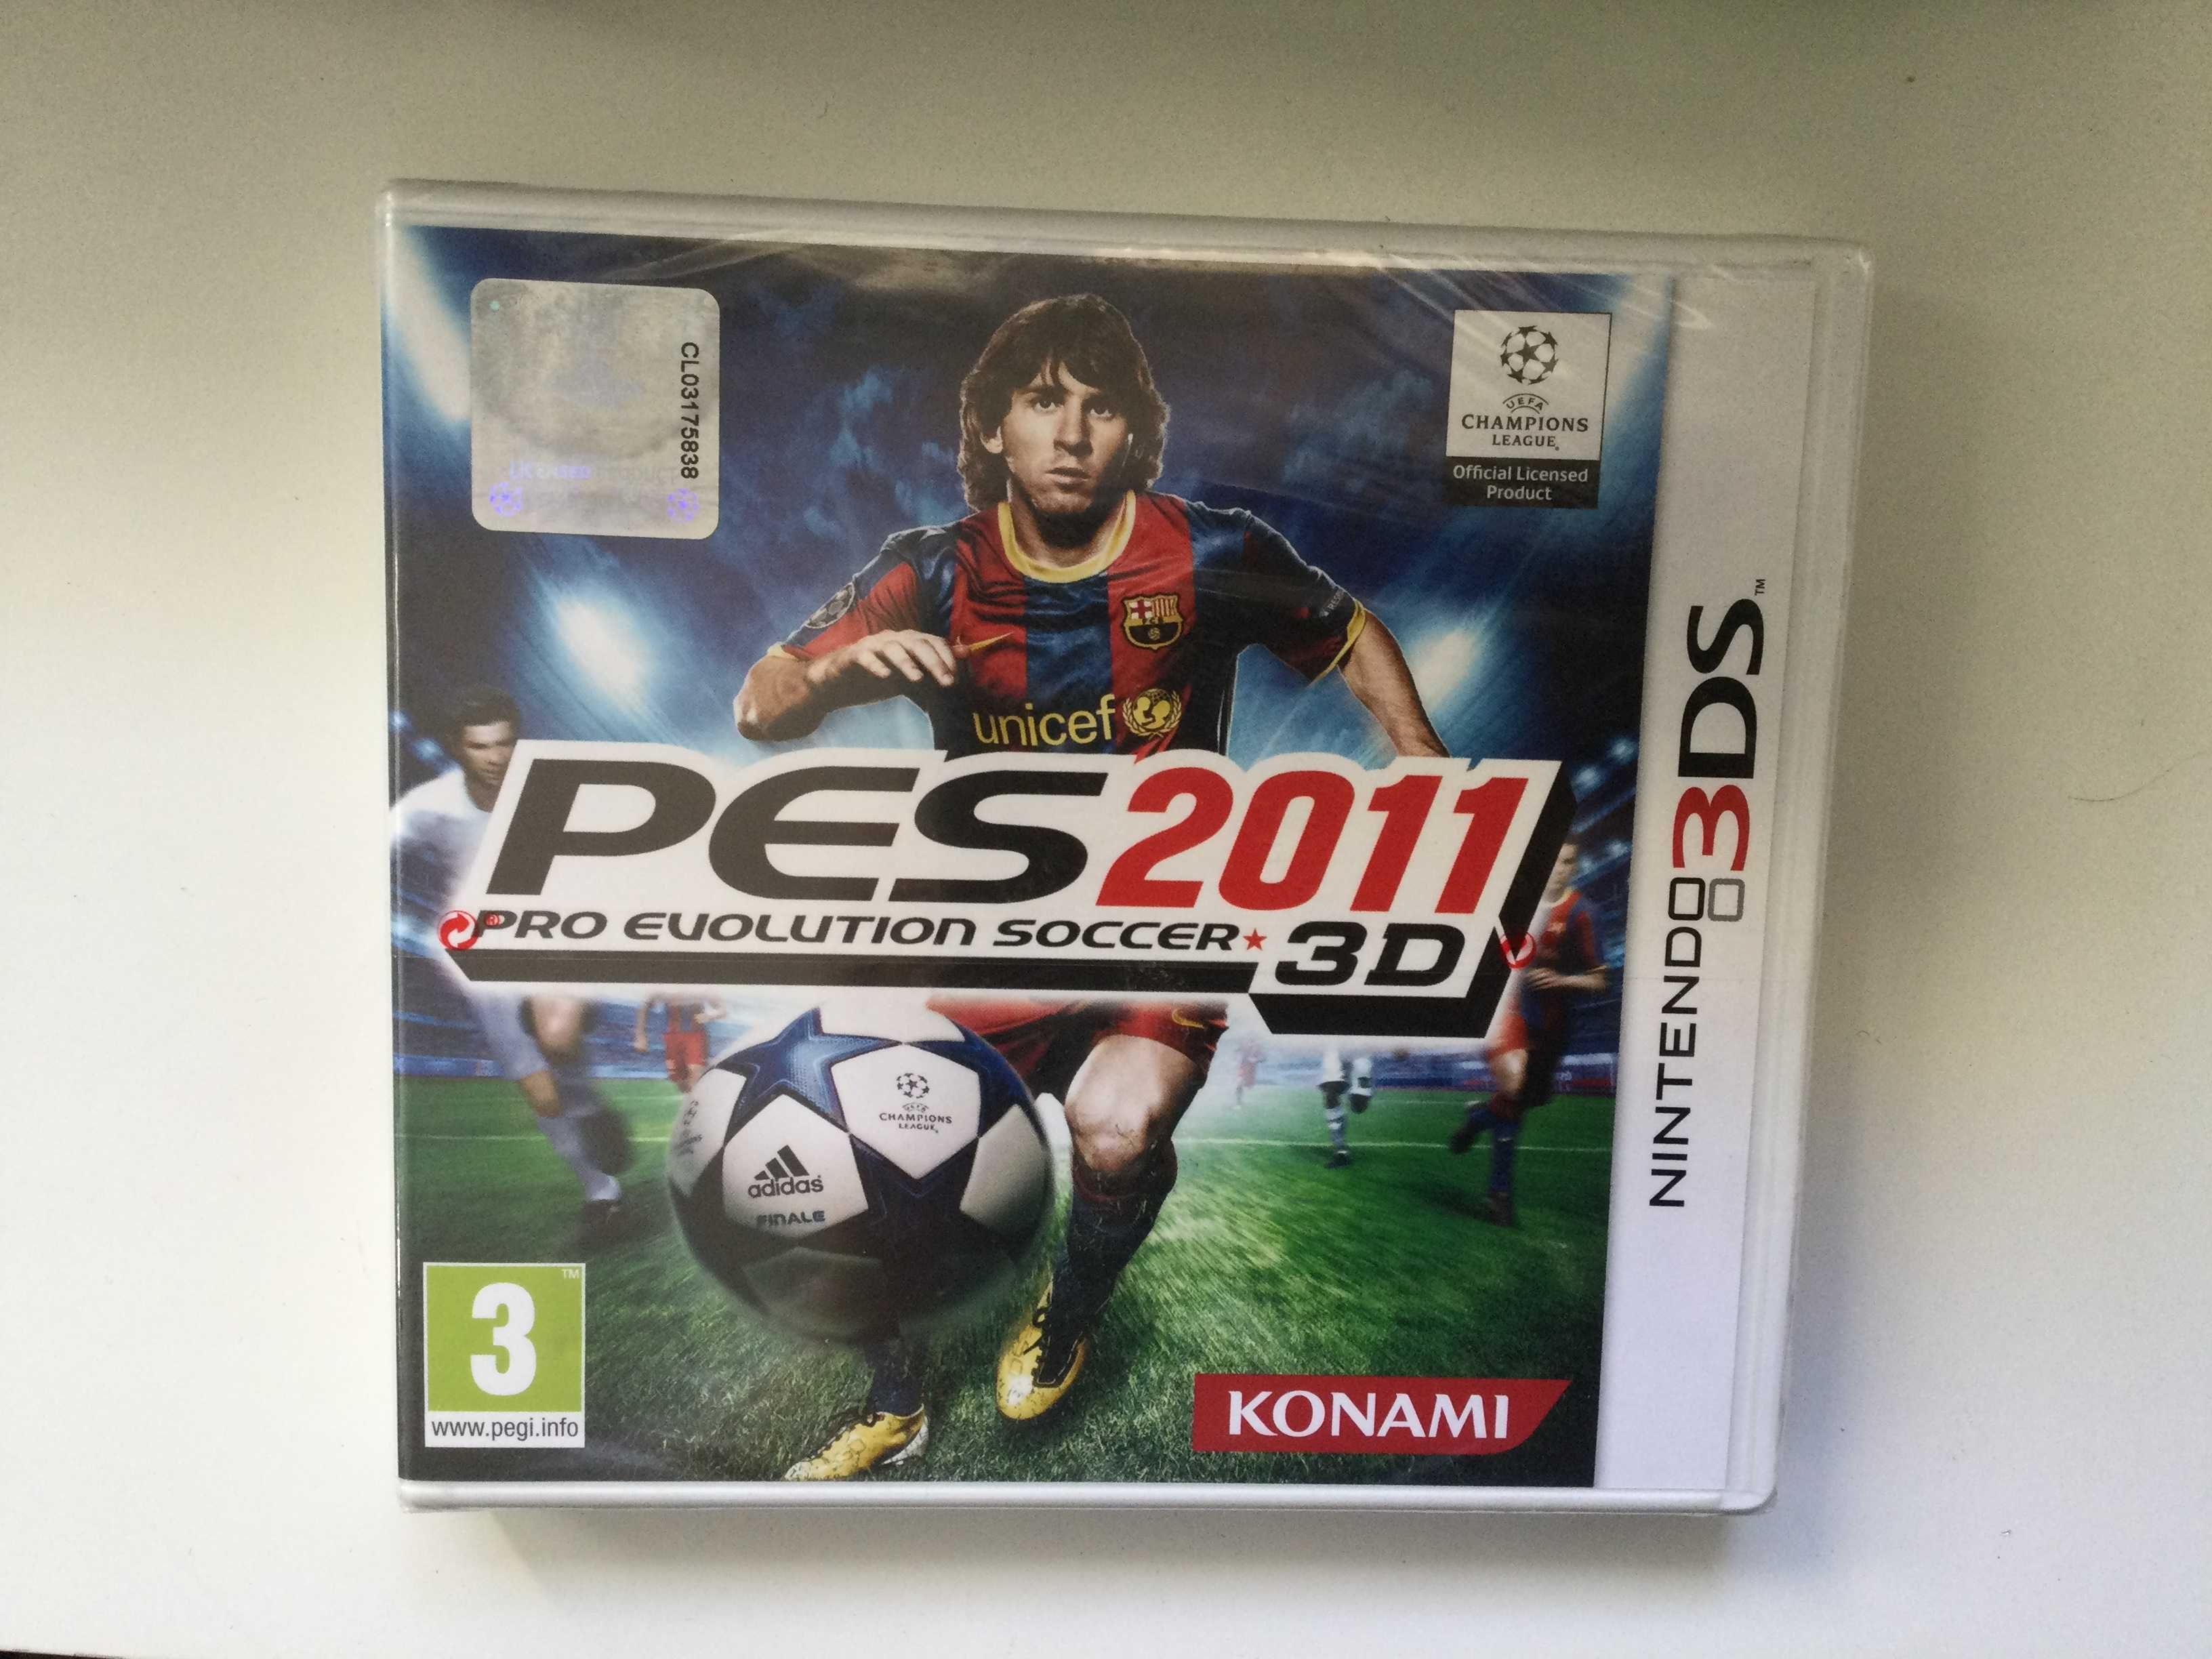 Pes 2011 - Nintendo 3DS, Pro Evolution Soccer 3D (selado)